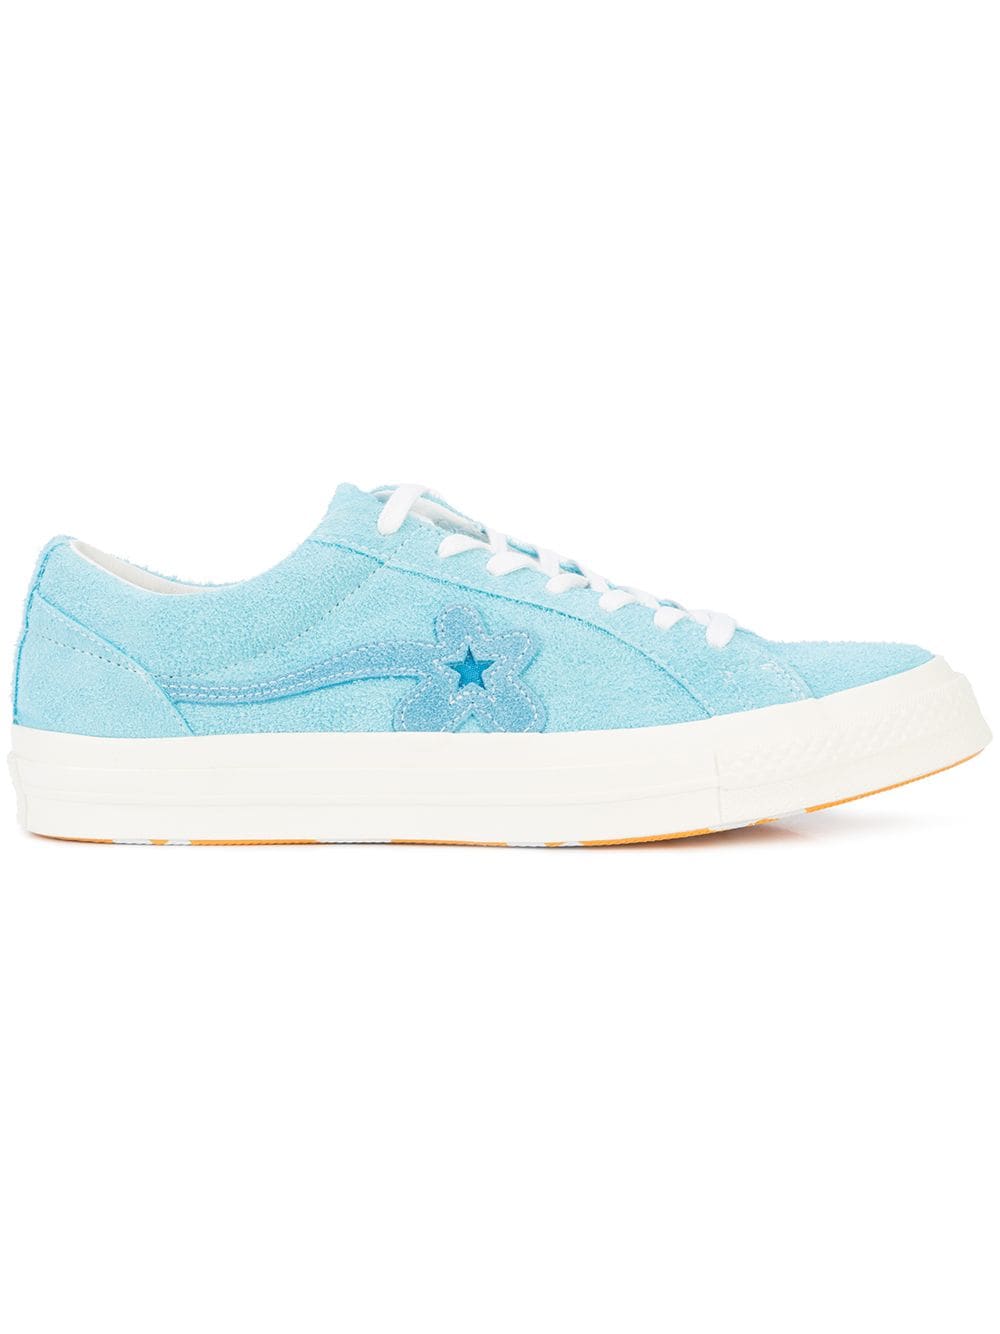 Converse x Golf Le Fleur One Star Ox "Bachelor Blue" sneakers von Converse